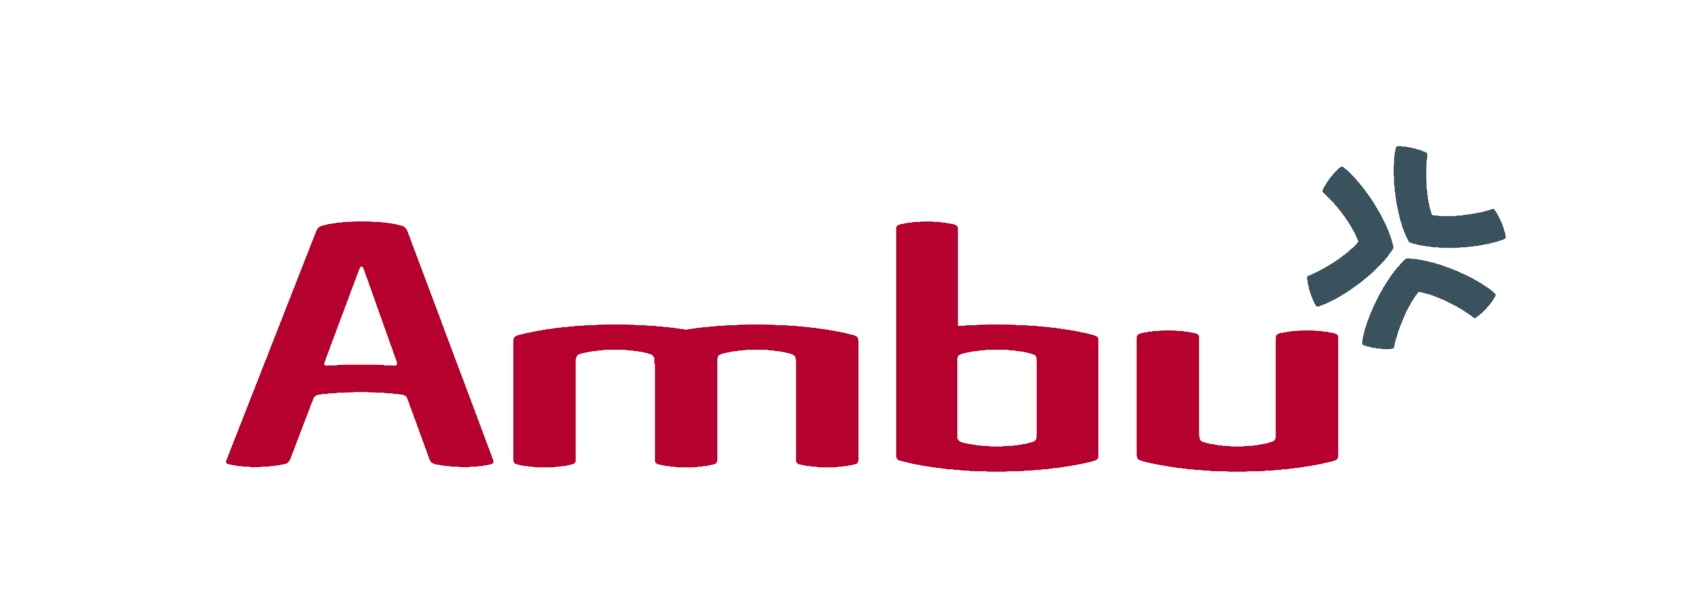 Ambu Logo